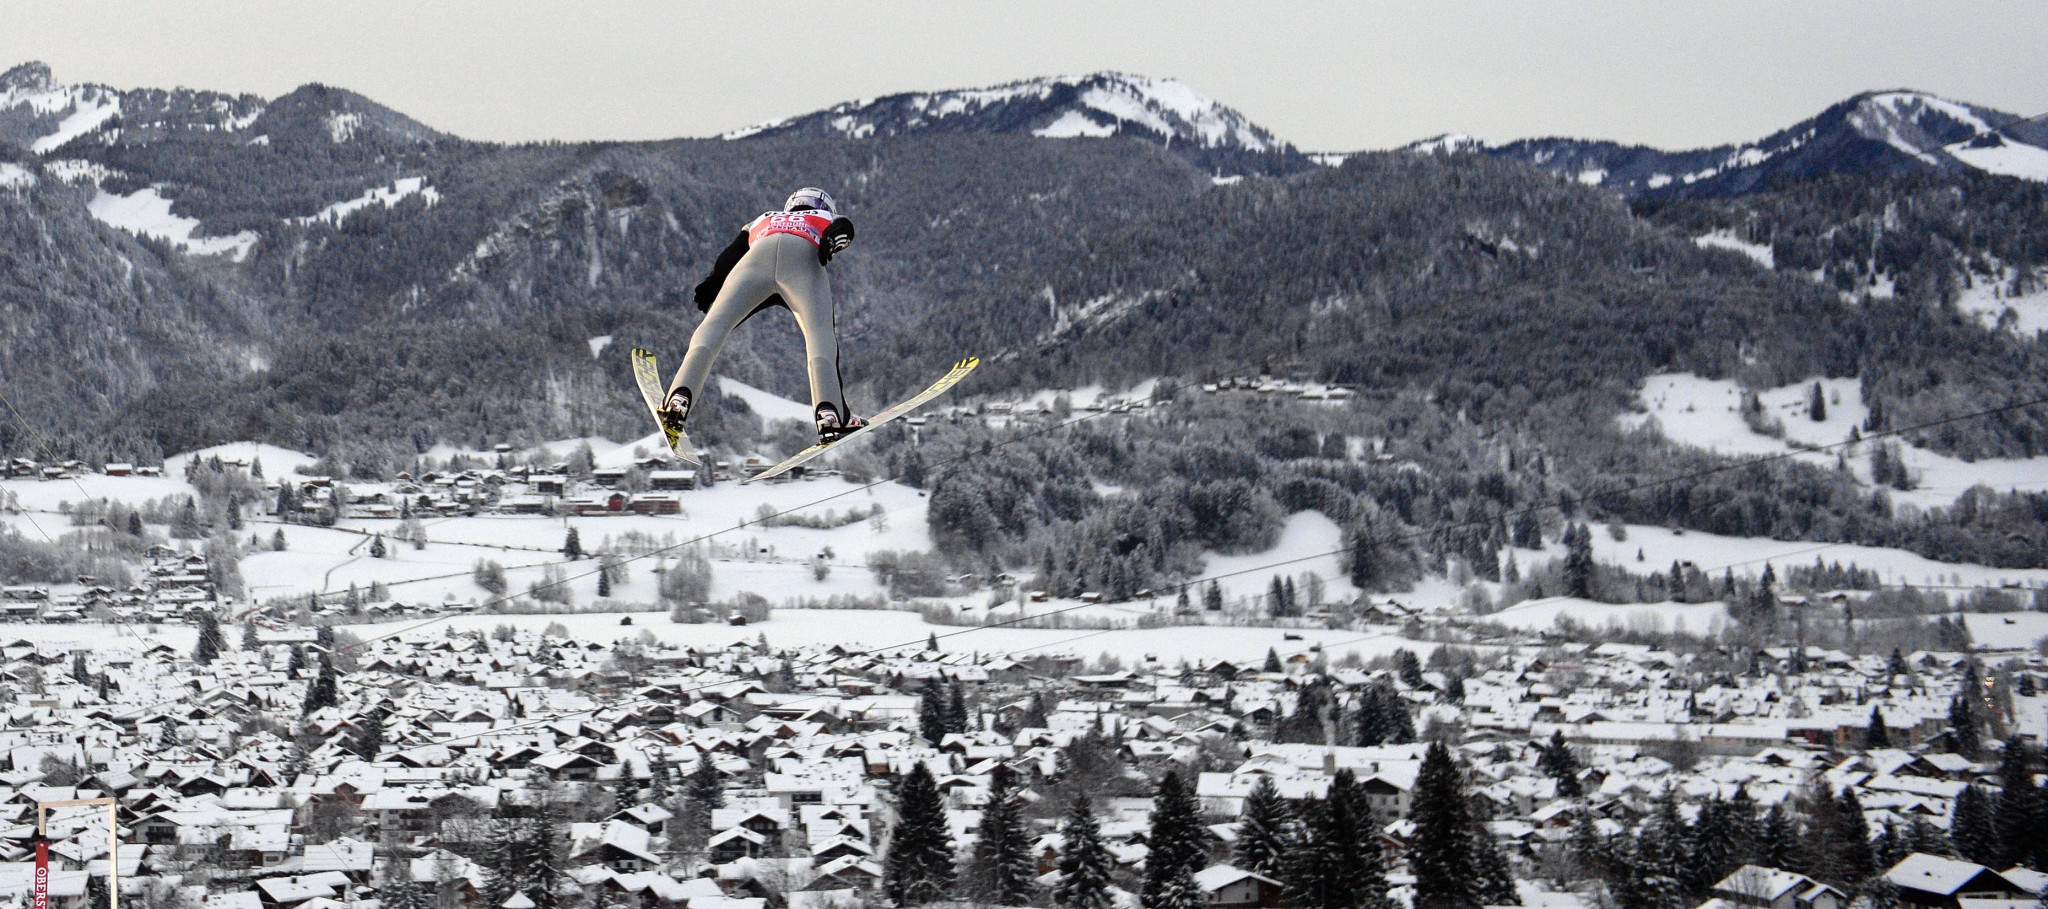 ski_jumping_getty_images.jpg